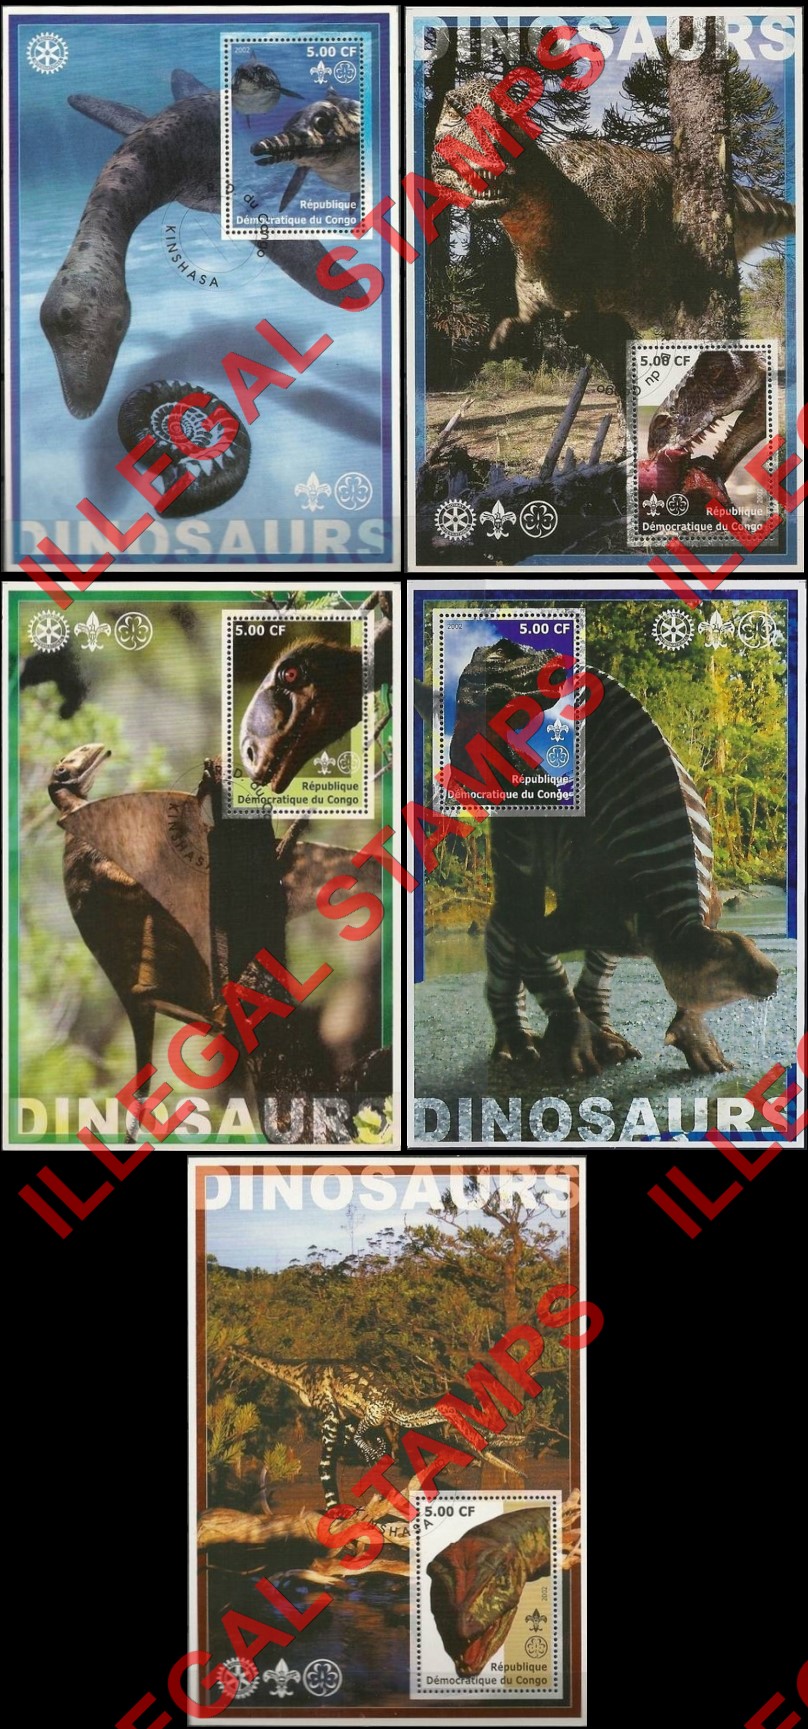 Congo Democratic Republic 2002 Dinosaurs Illegal Stamp Souvenir Sheets of 1 (Part 5)